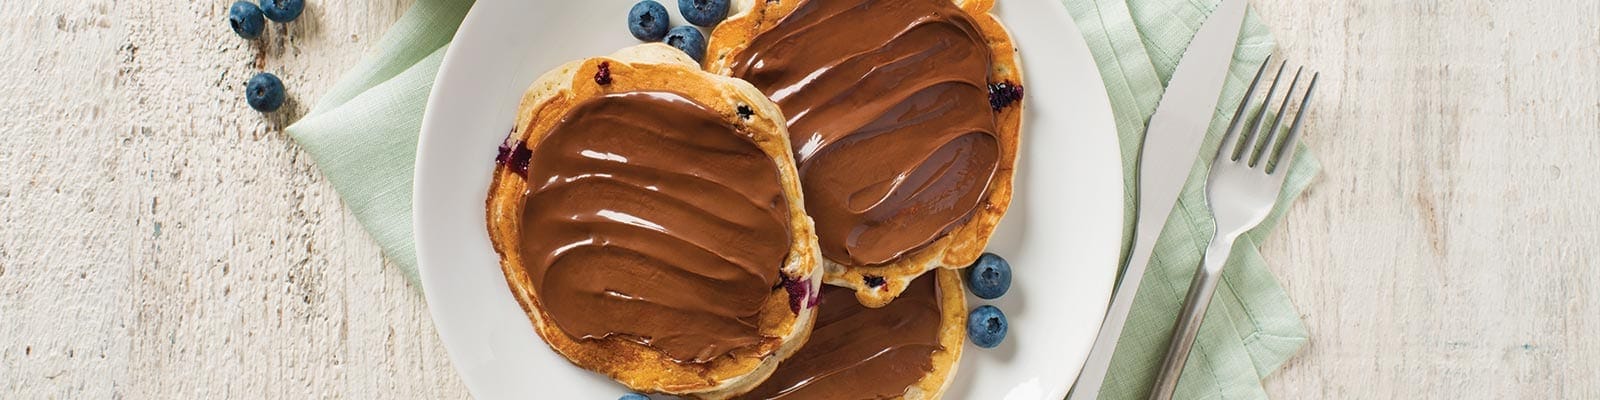 Yogurt and Berry Pancakes with NUTELLA<sup>®</sup> hazelnut spread